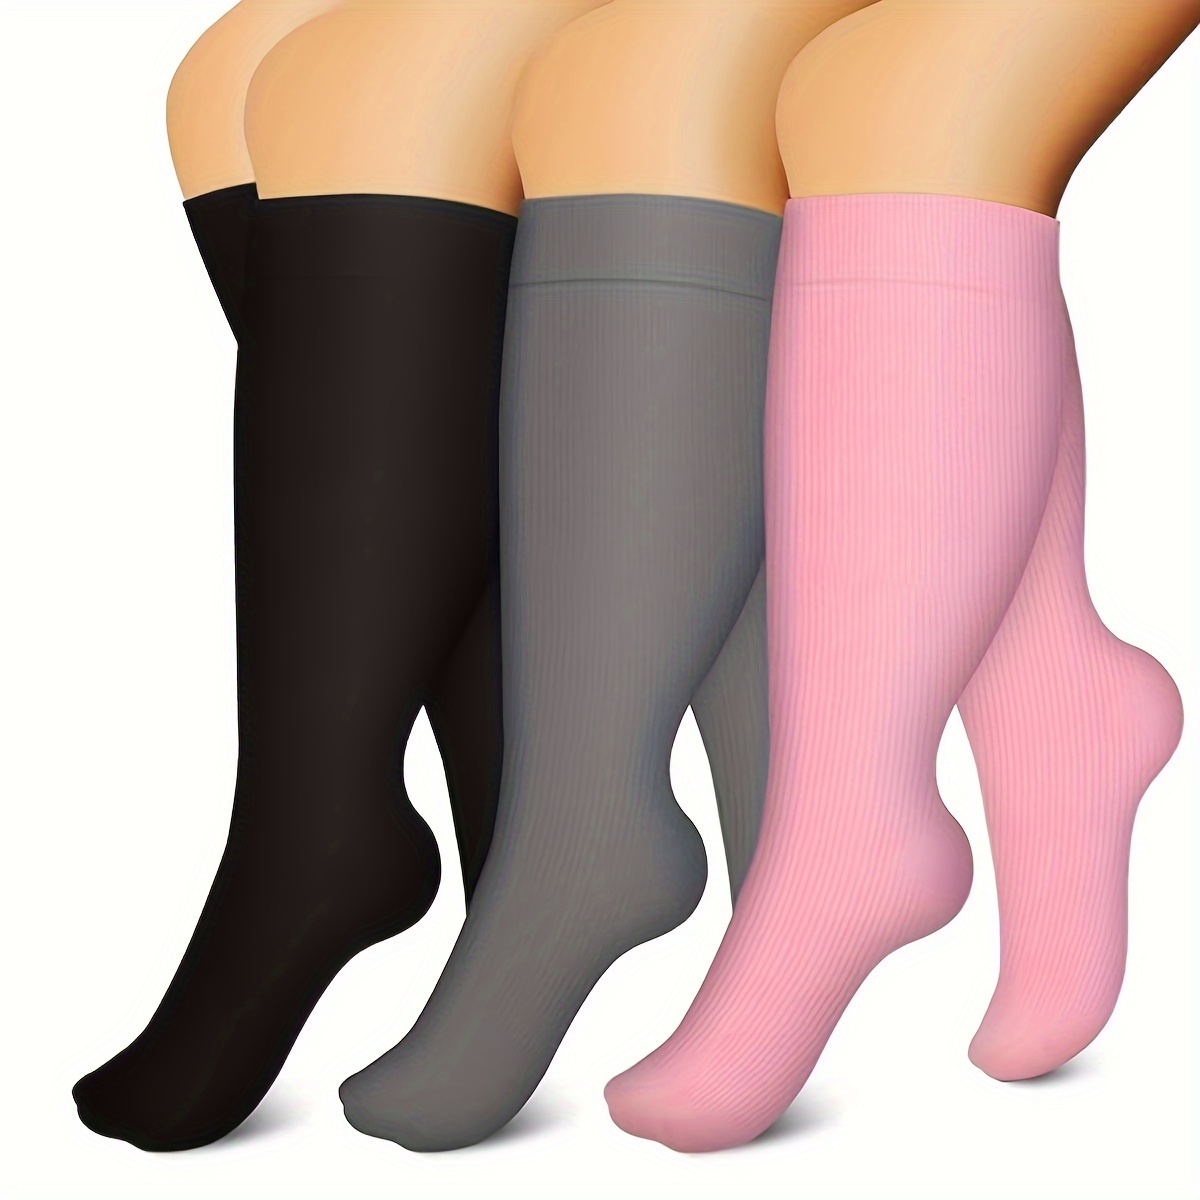 Plus Size Compression Socks Circulation 15-20 mmhg for Women Men